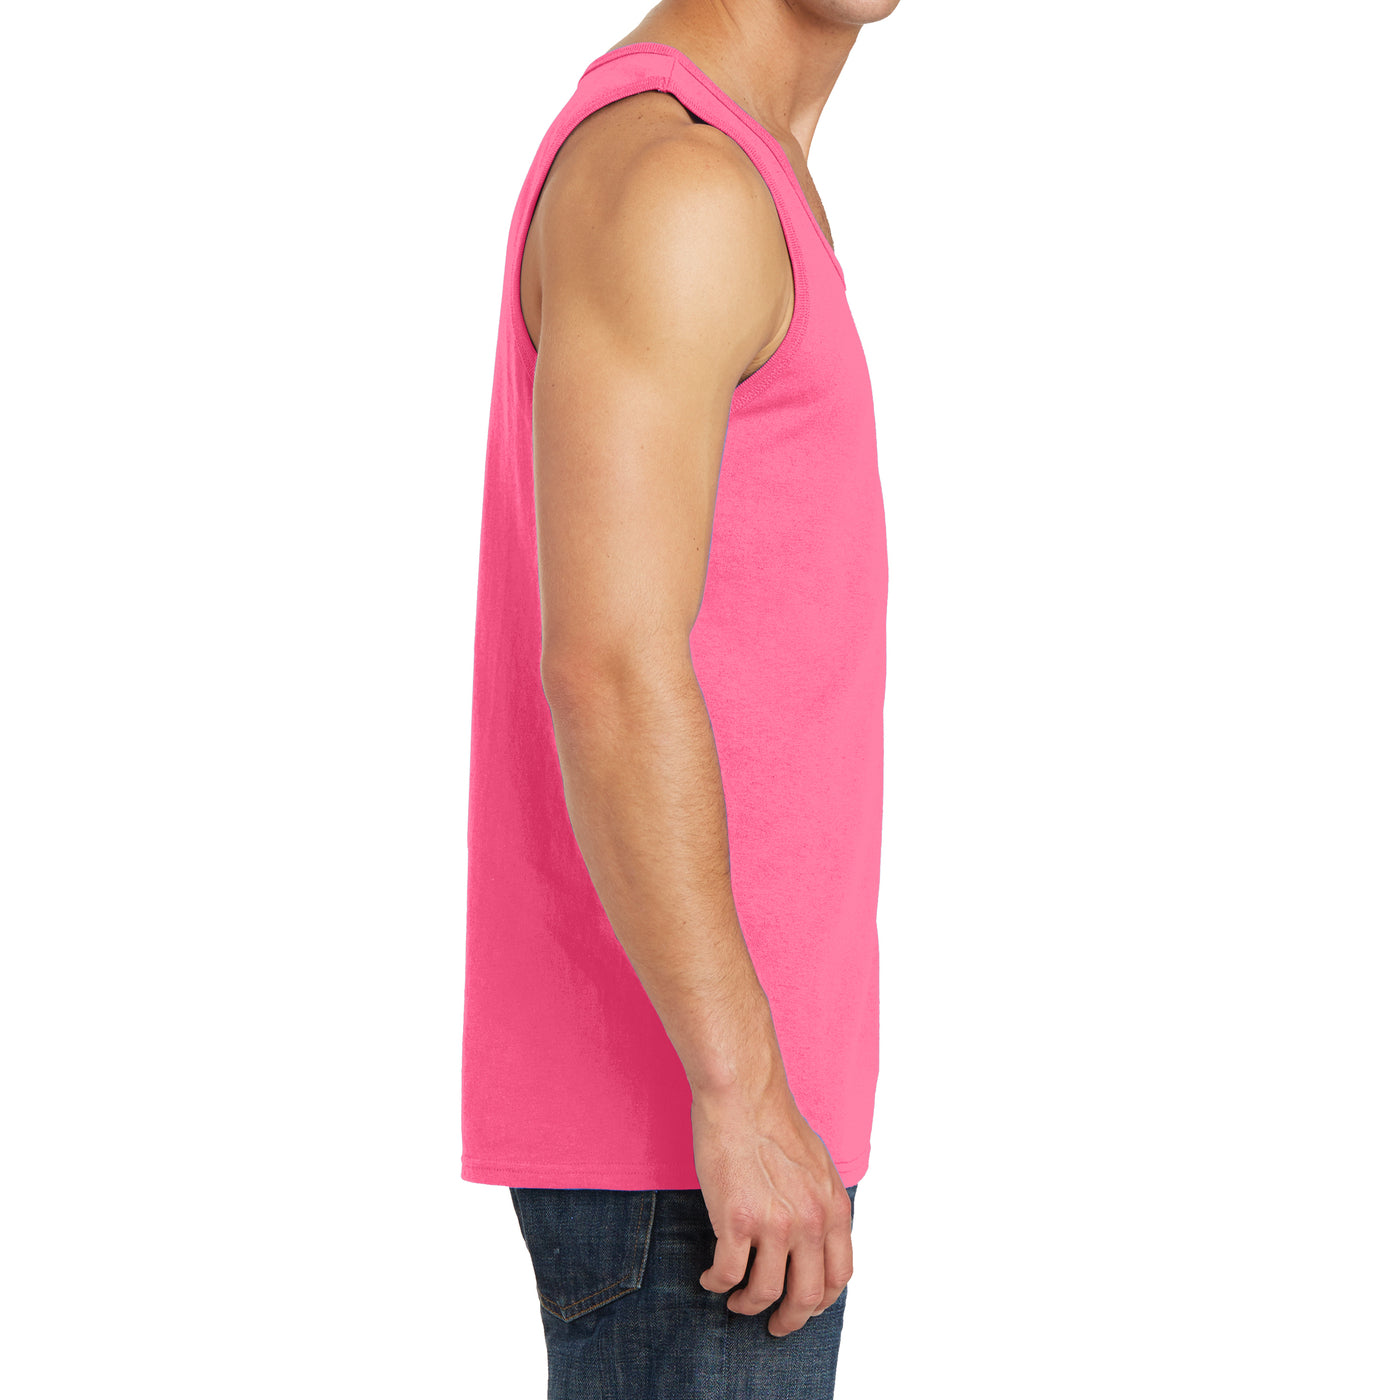 Men's Core Cotton Tank Top - Neon Pink - Side